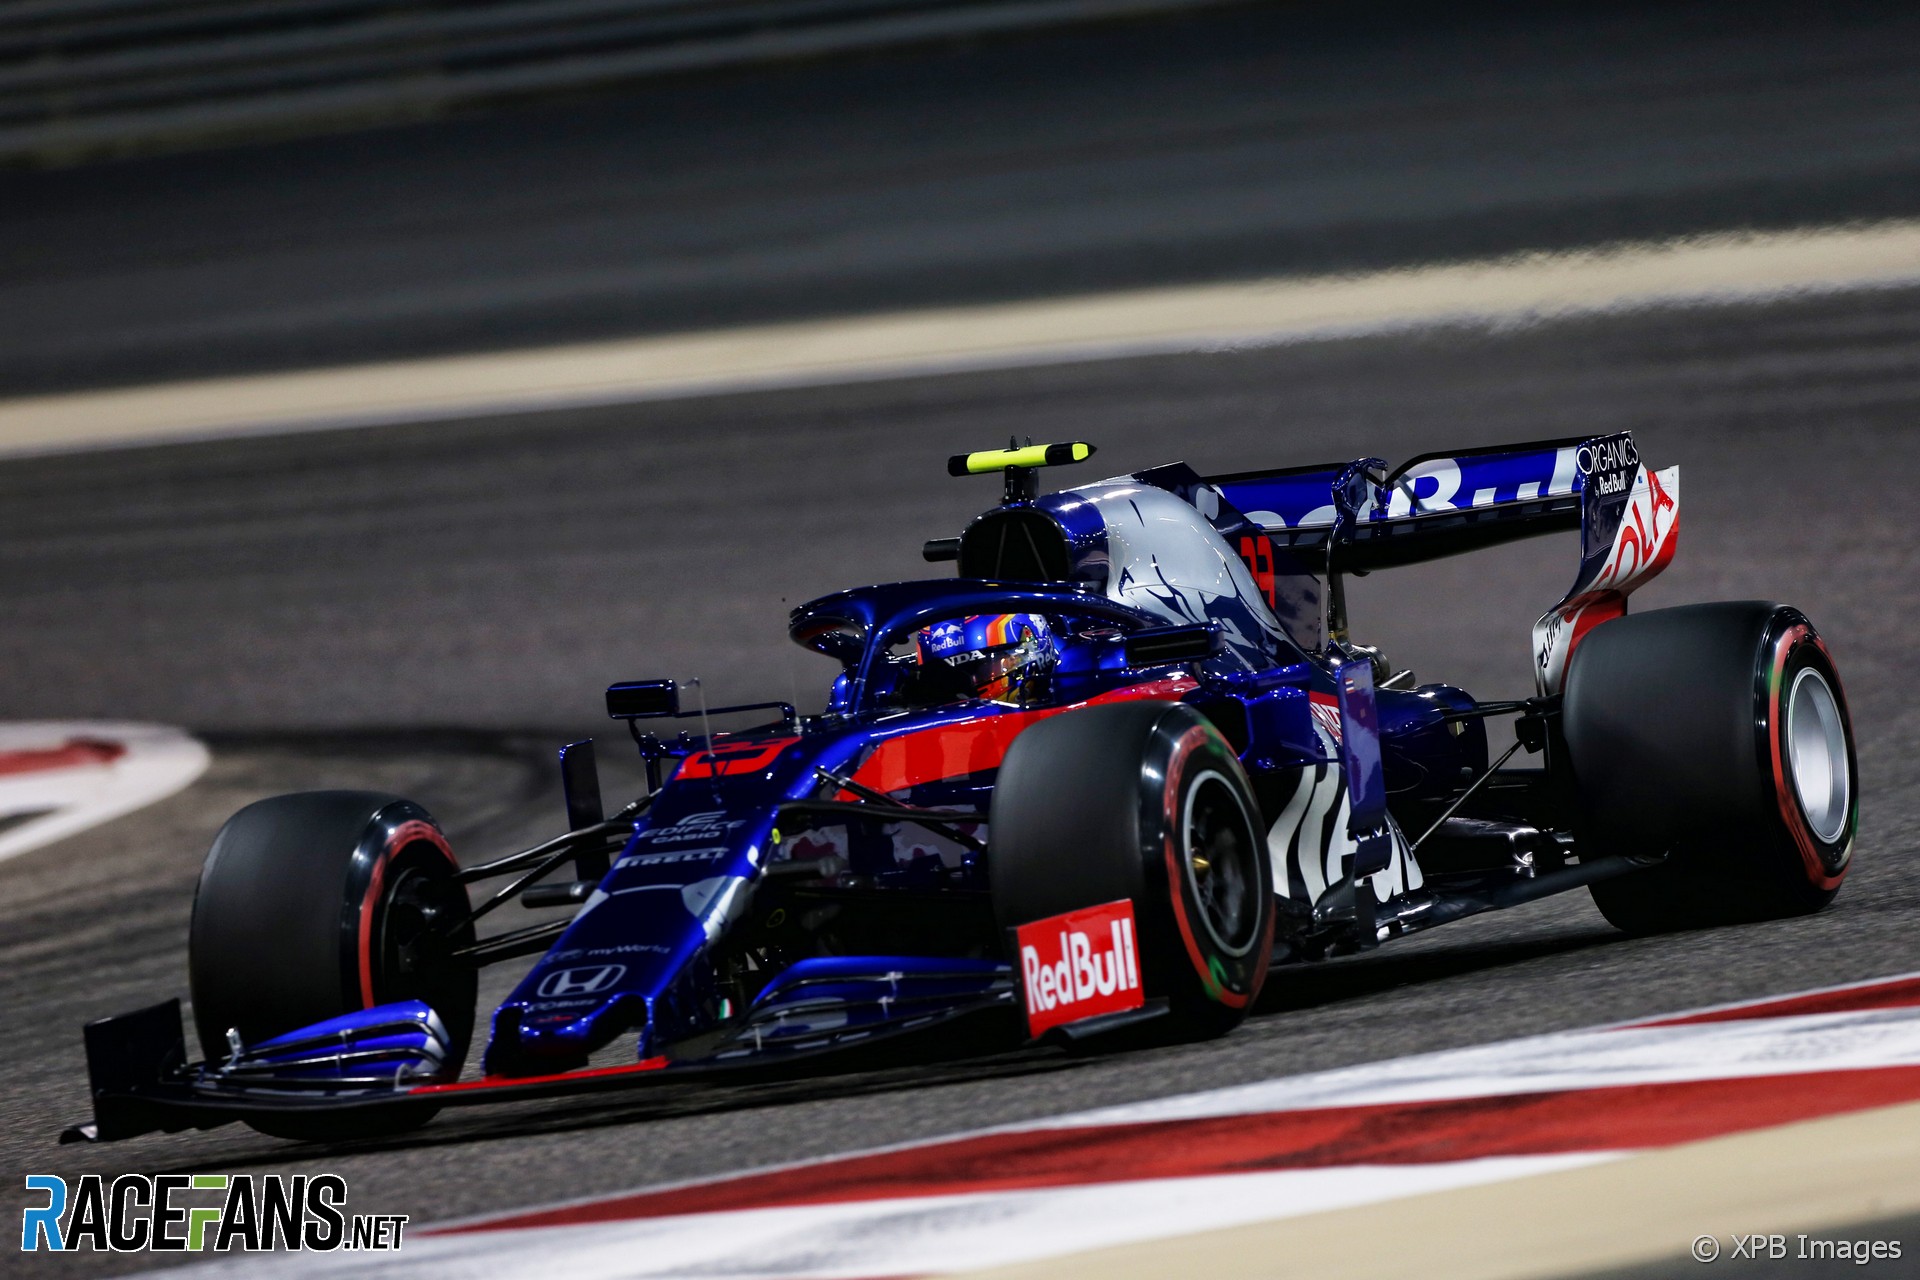 Alexander Albon, Toro Rosso, Bahrain International Circuit, 2019